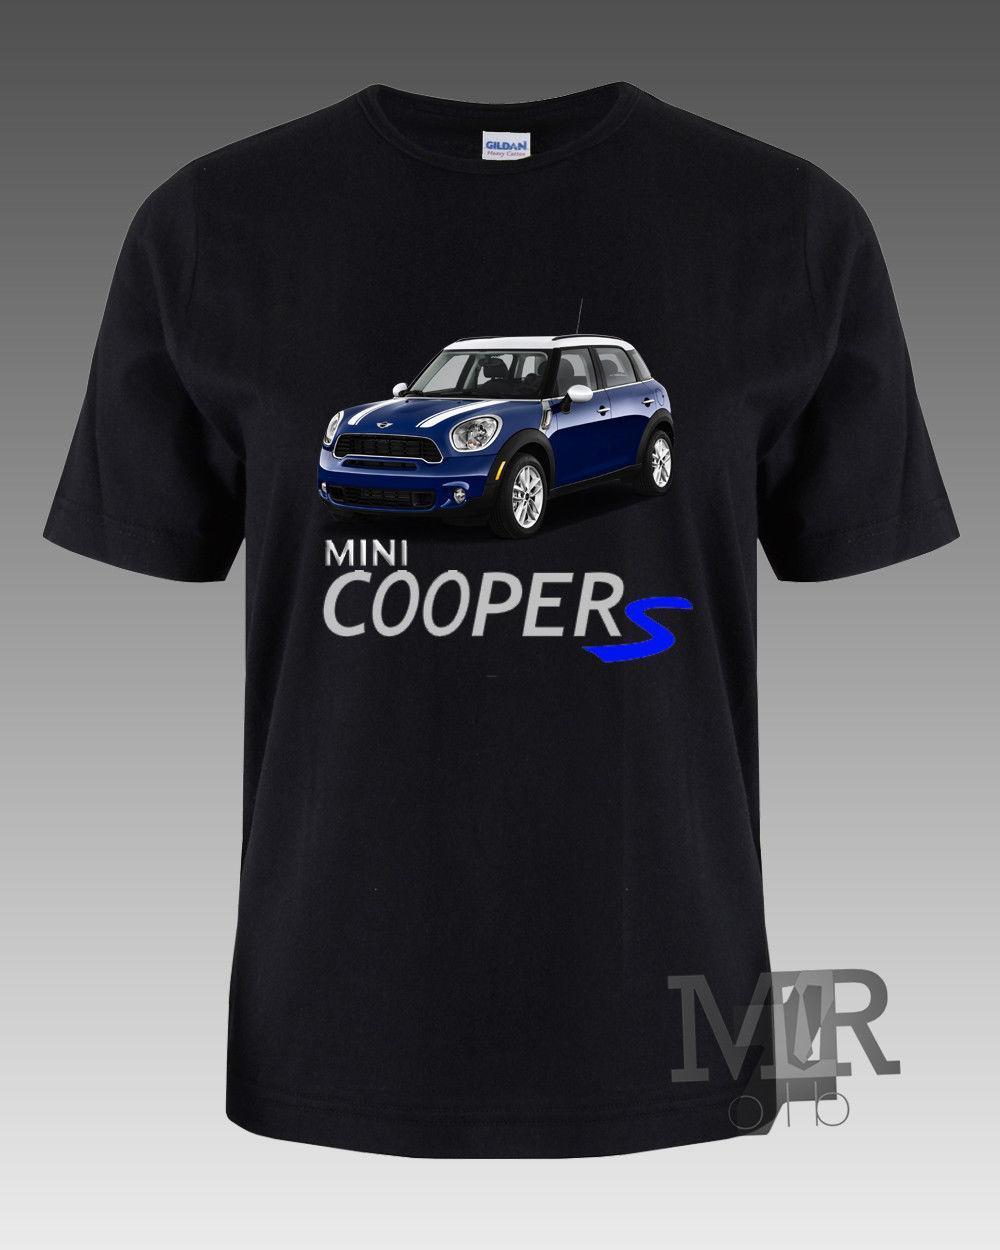 New Mini Cooper Logo - New Mini Cooper Blue Car Logo Black T Shirt M L XL 2XL Cotton Brand ...